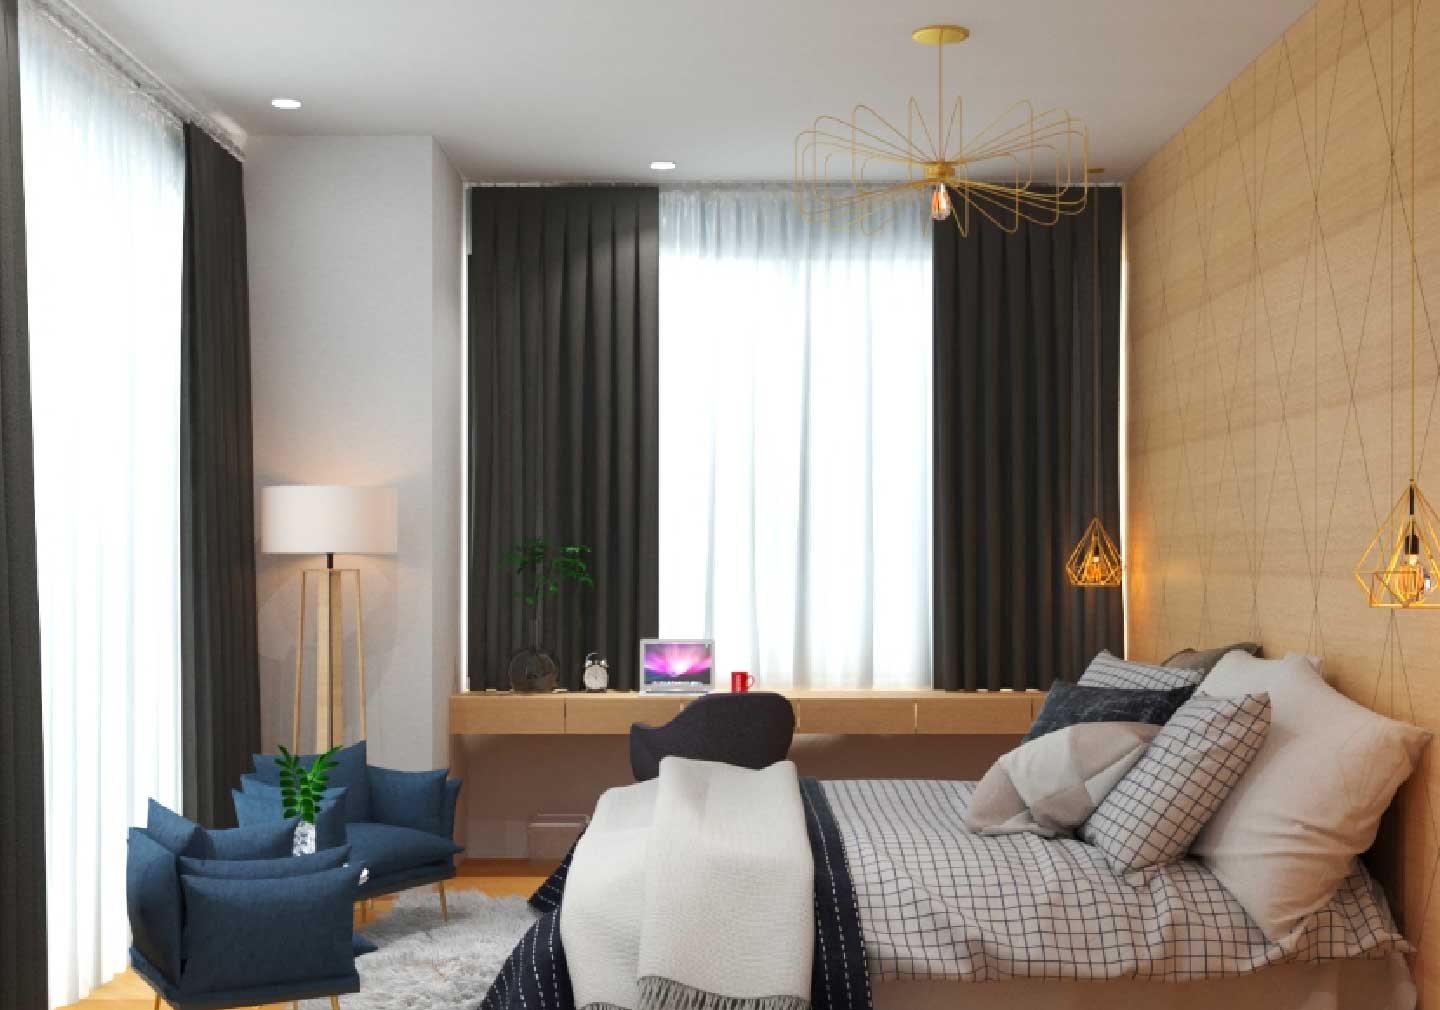 Luxurious Bedroom Interior Designs